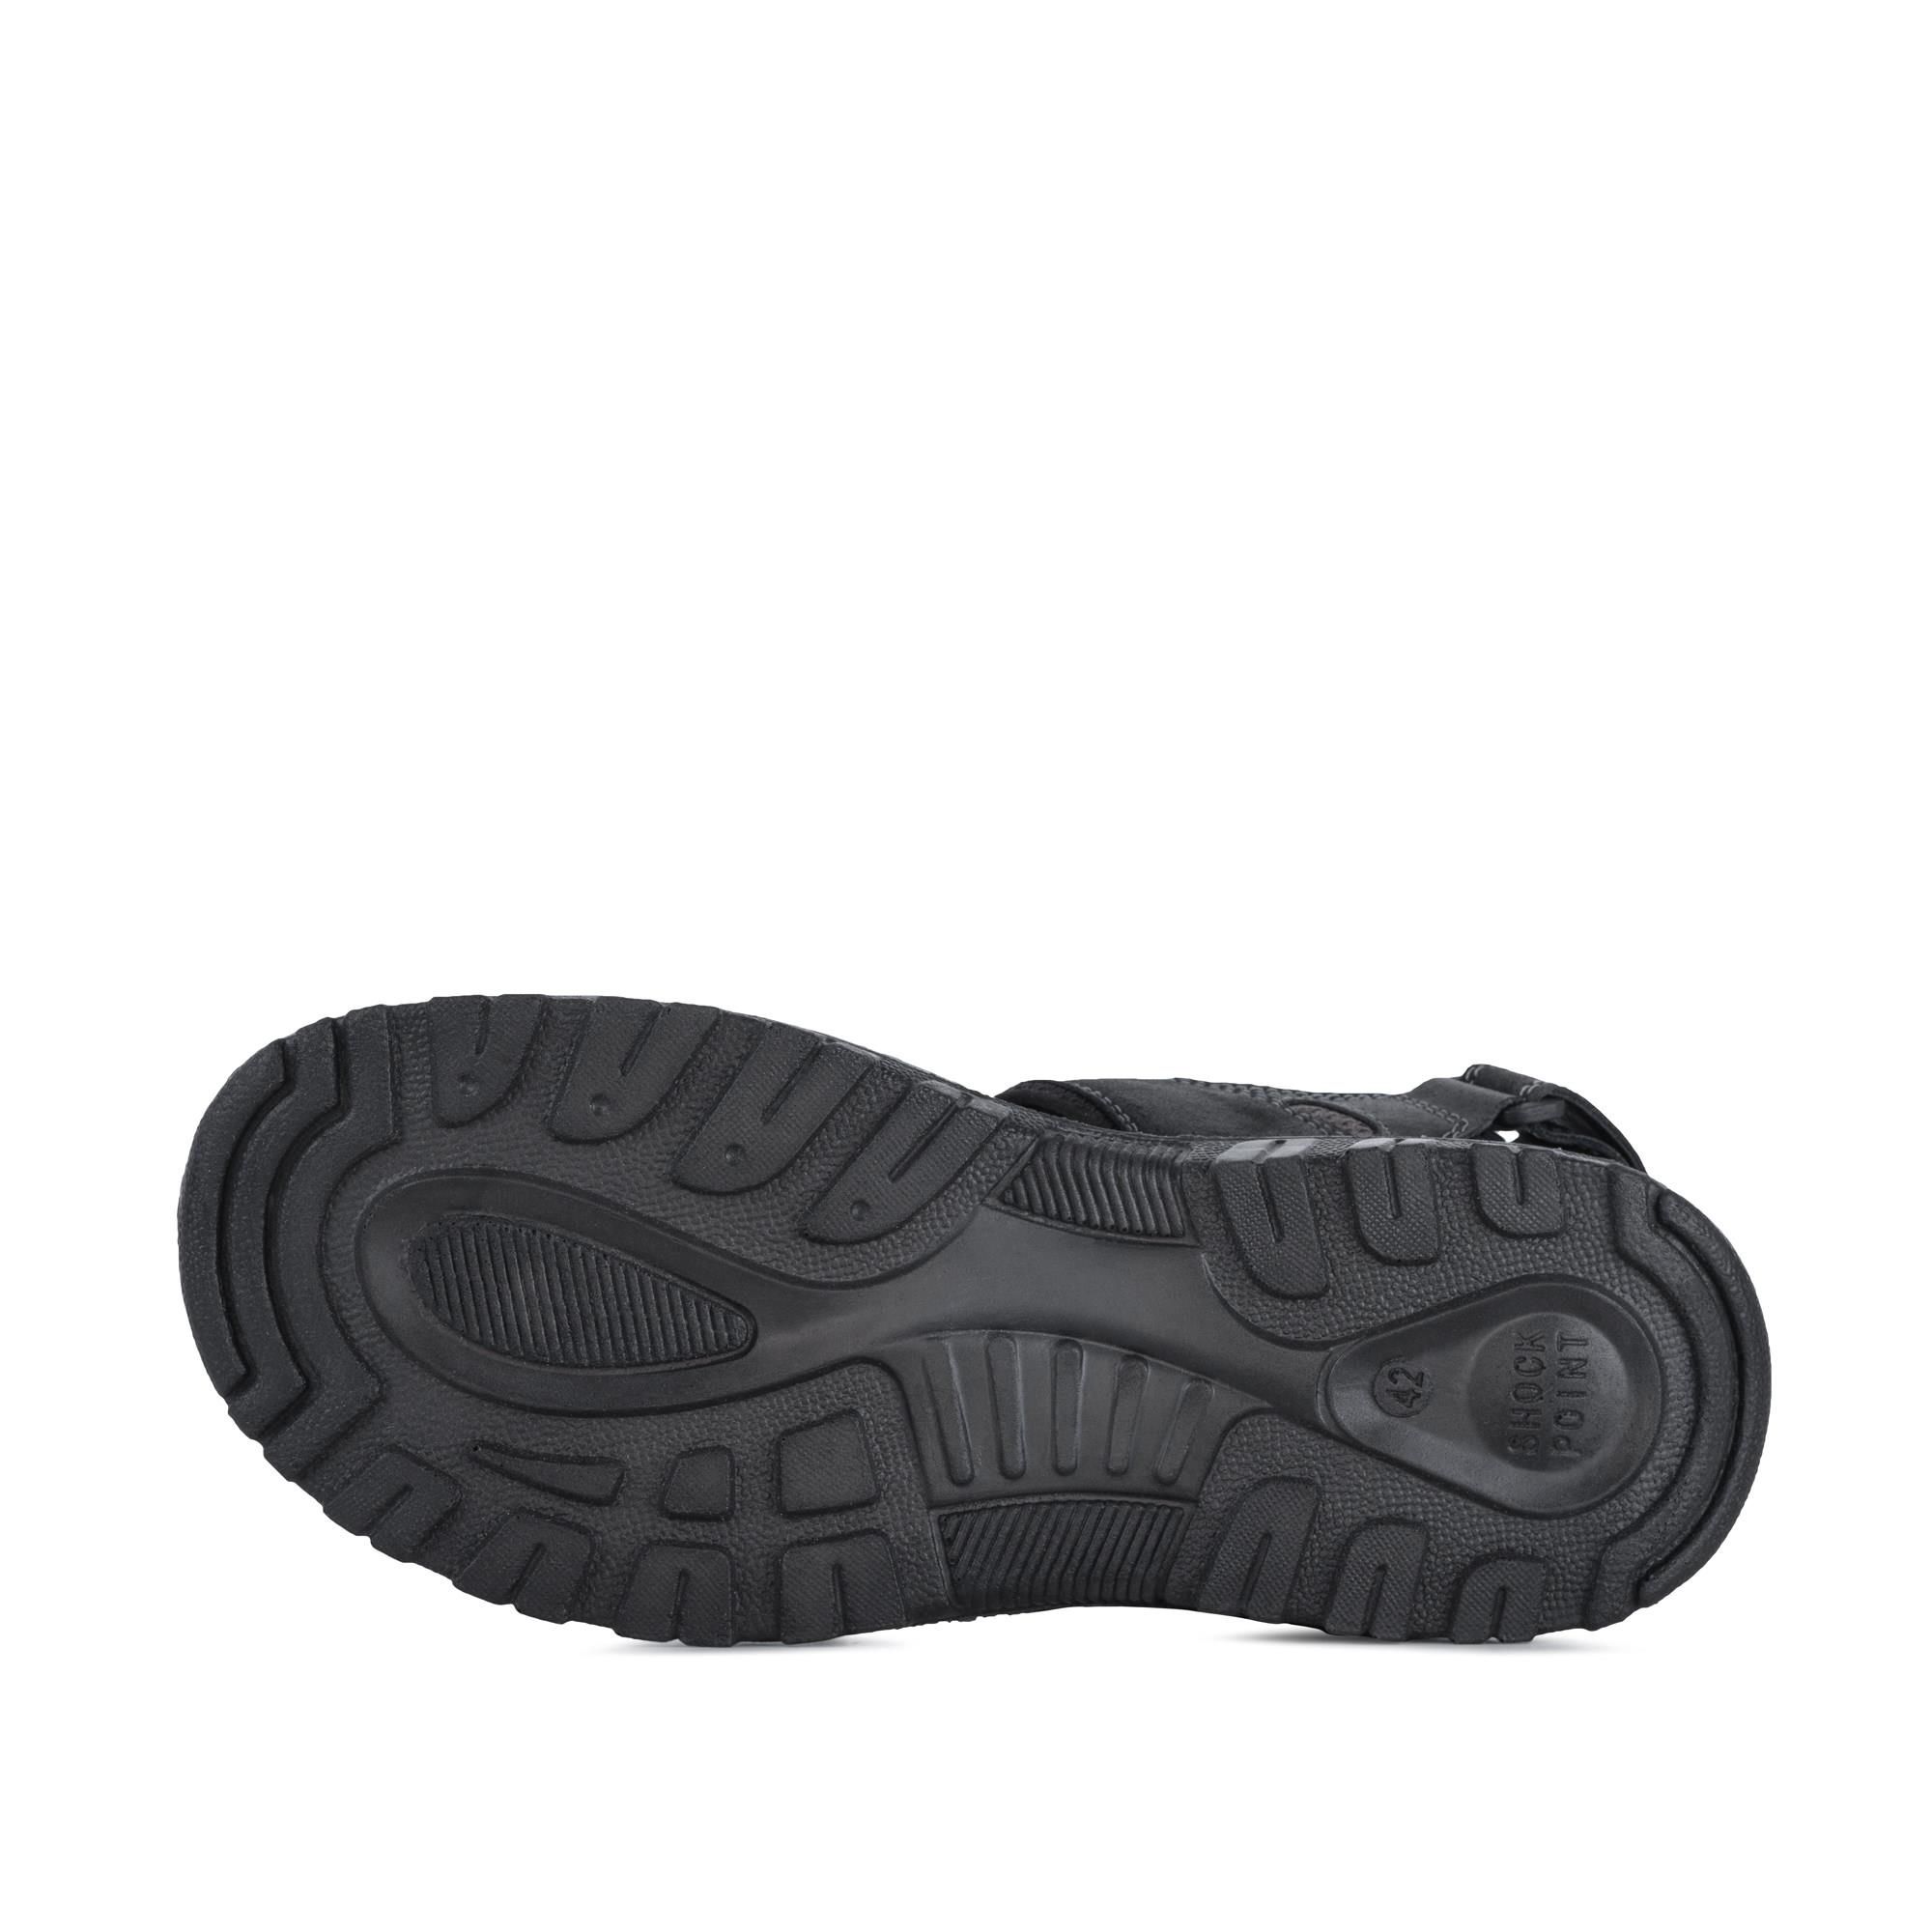 Redfoot 5800 Sandal